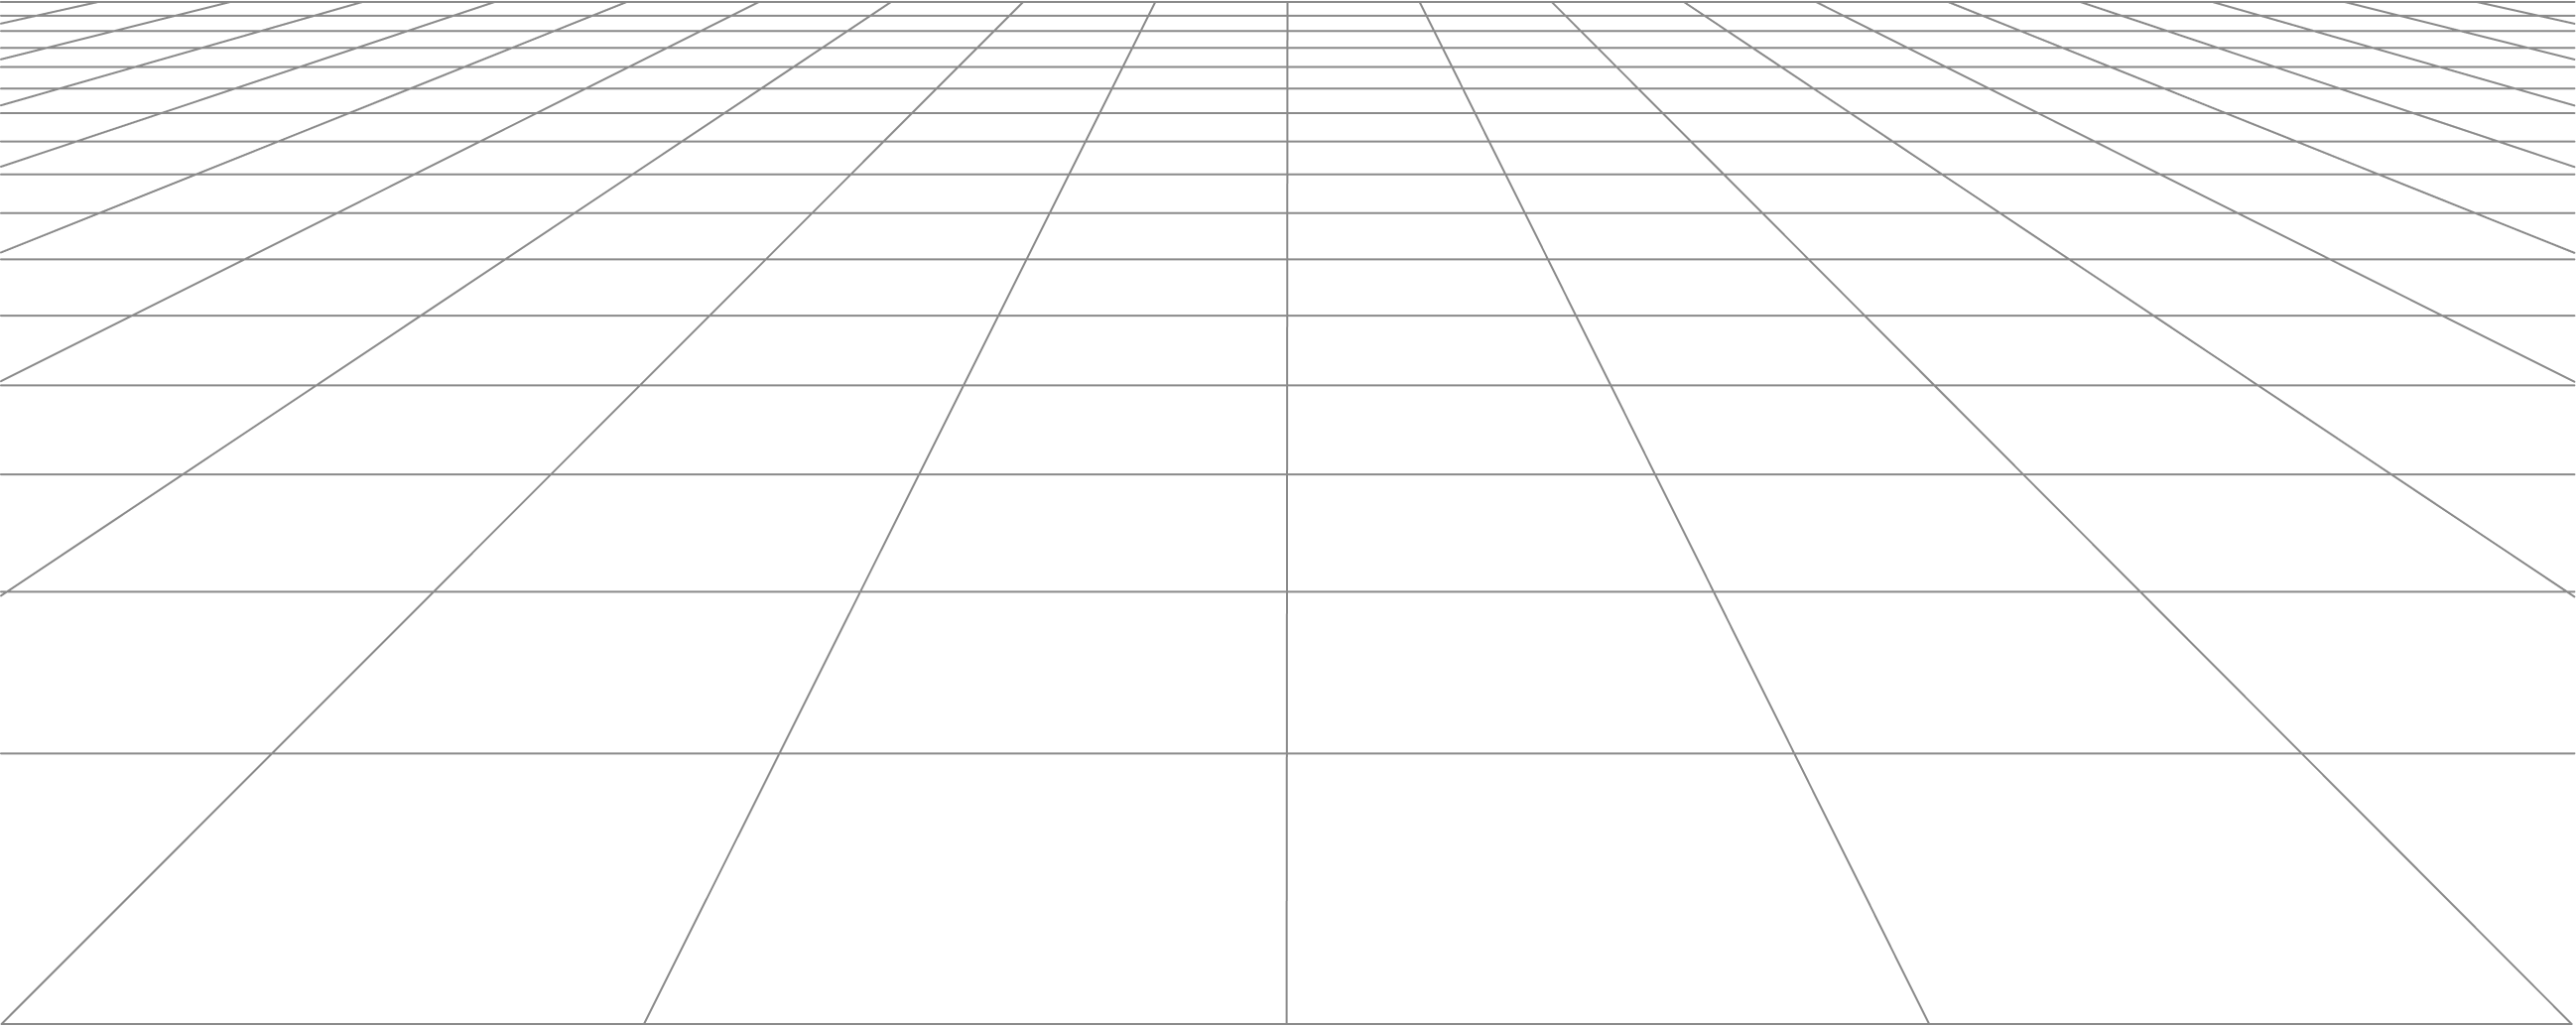 grid illustration